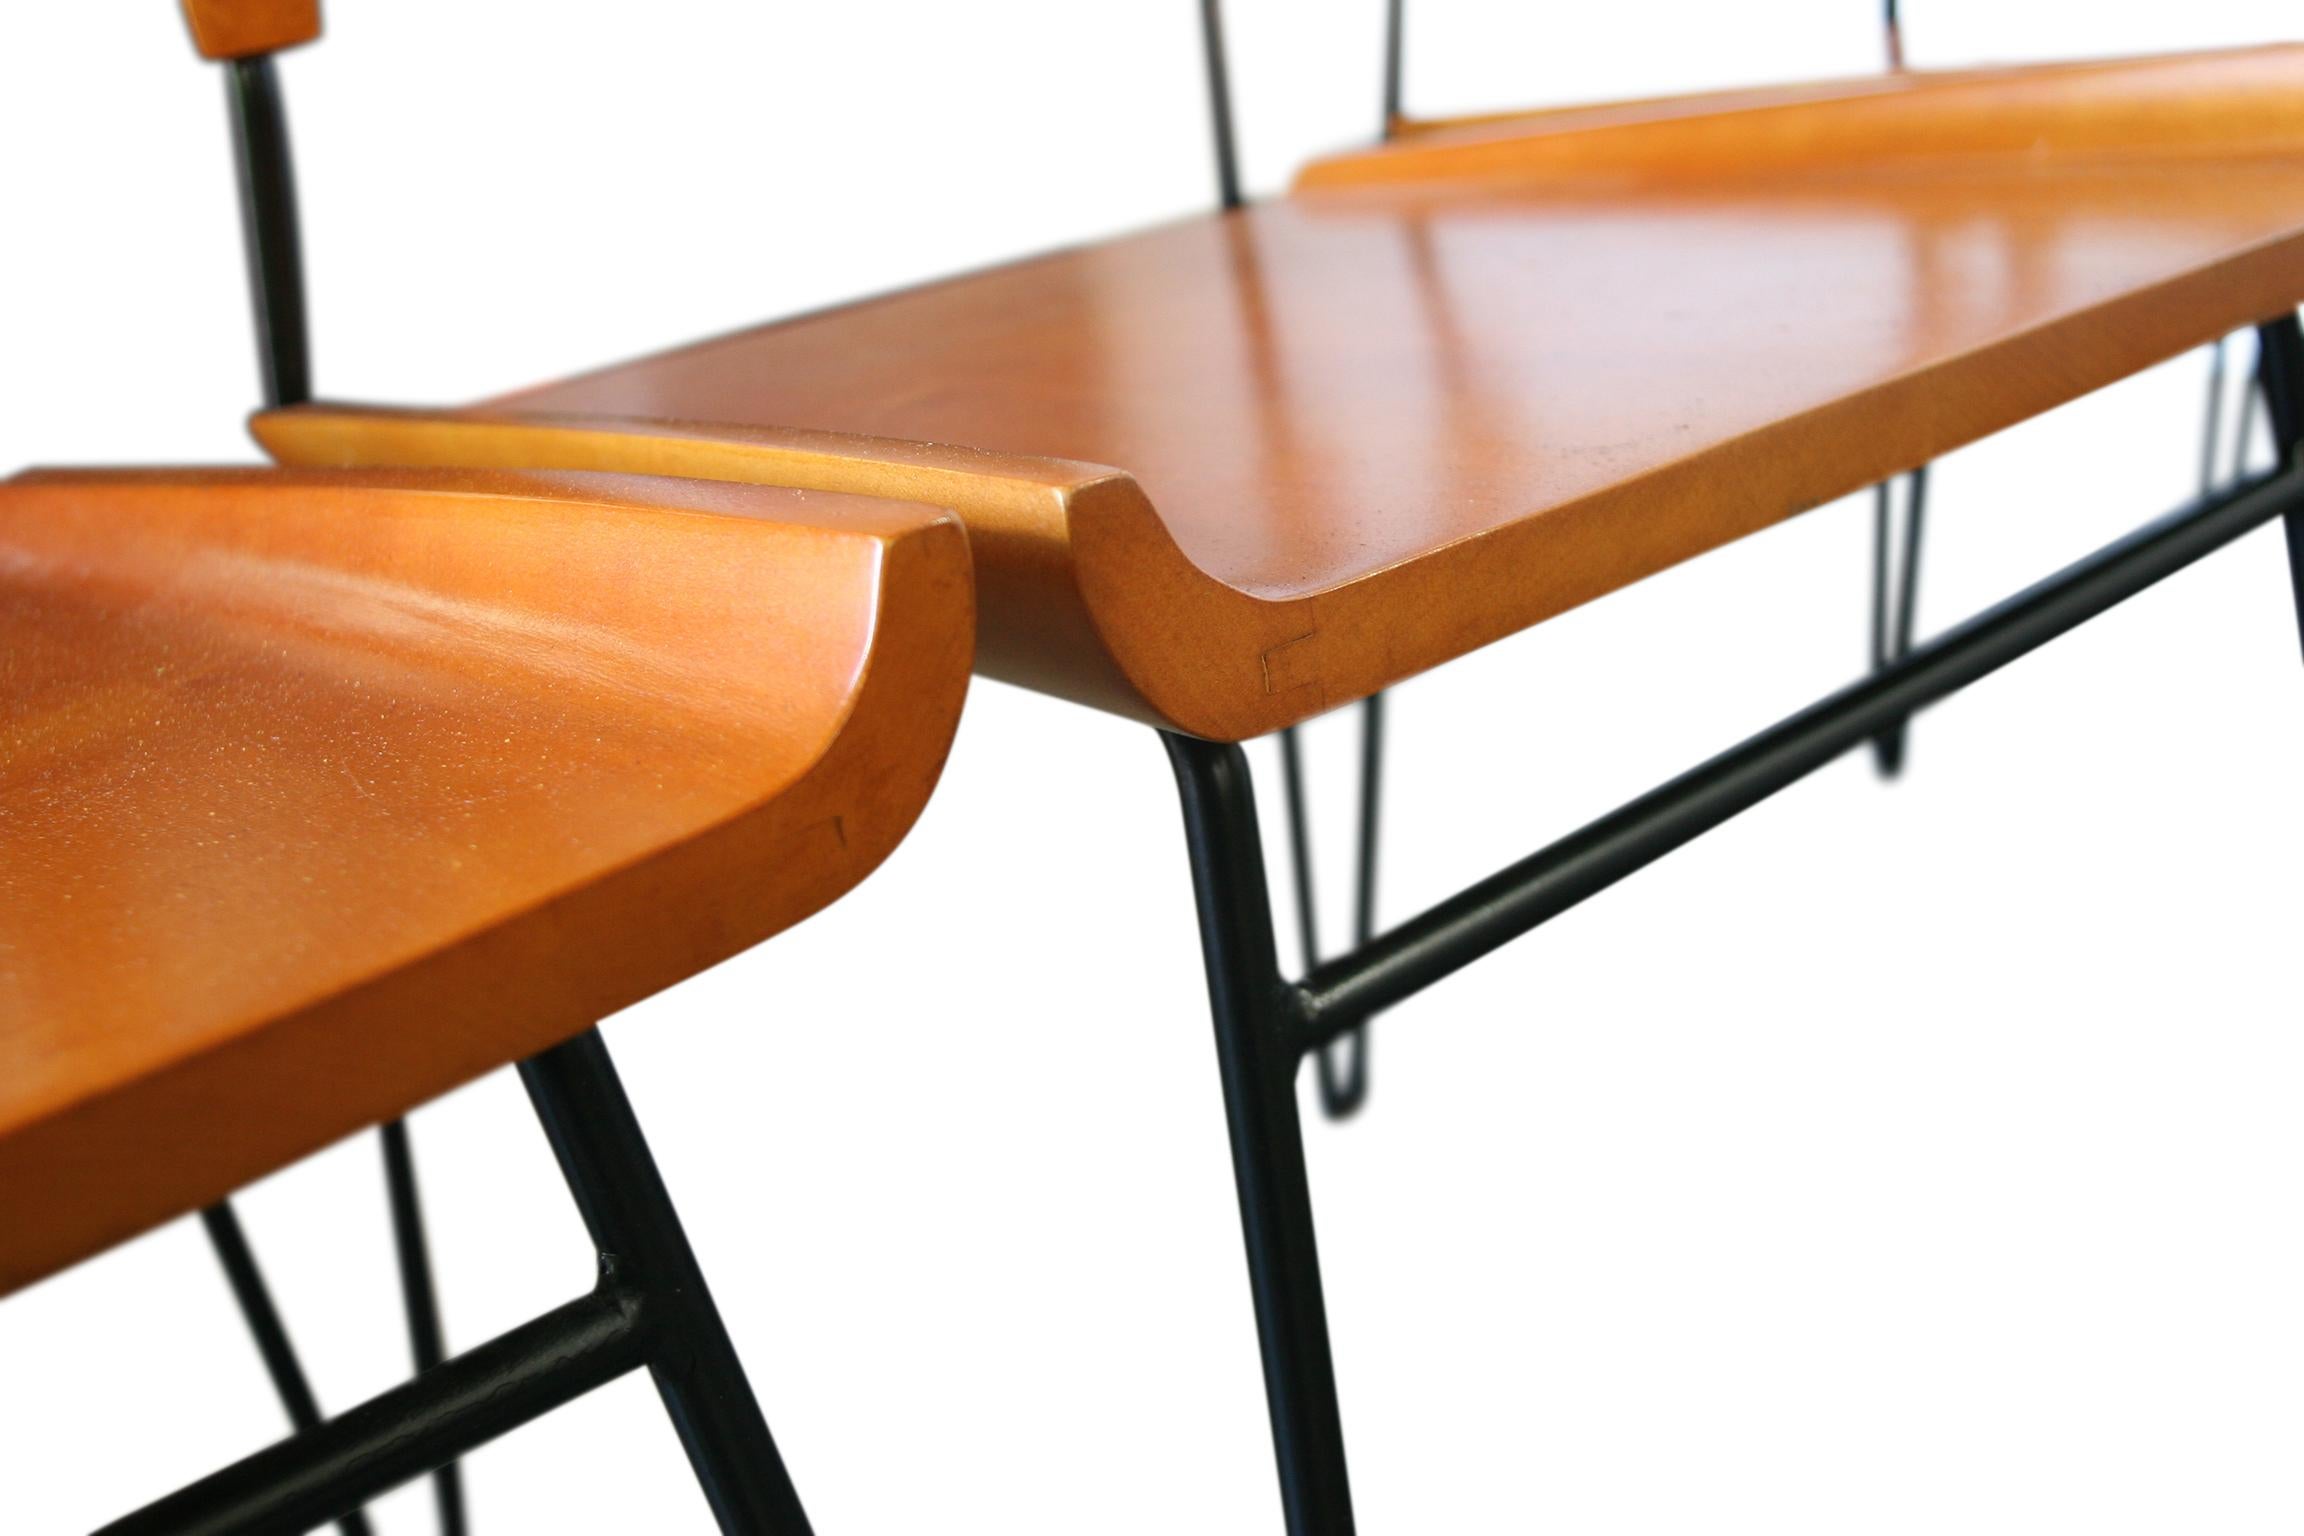 20th Century Paul McCobb Planner Group Shovel Chairs #1533 Maple Iron Set of 4